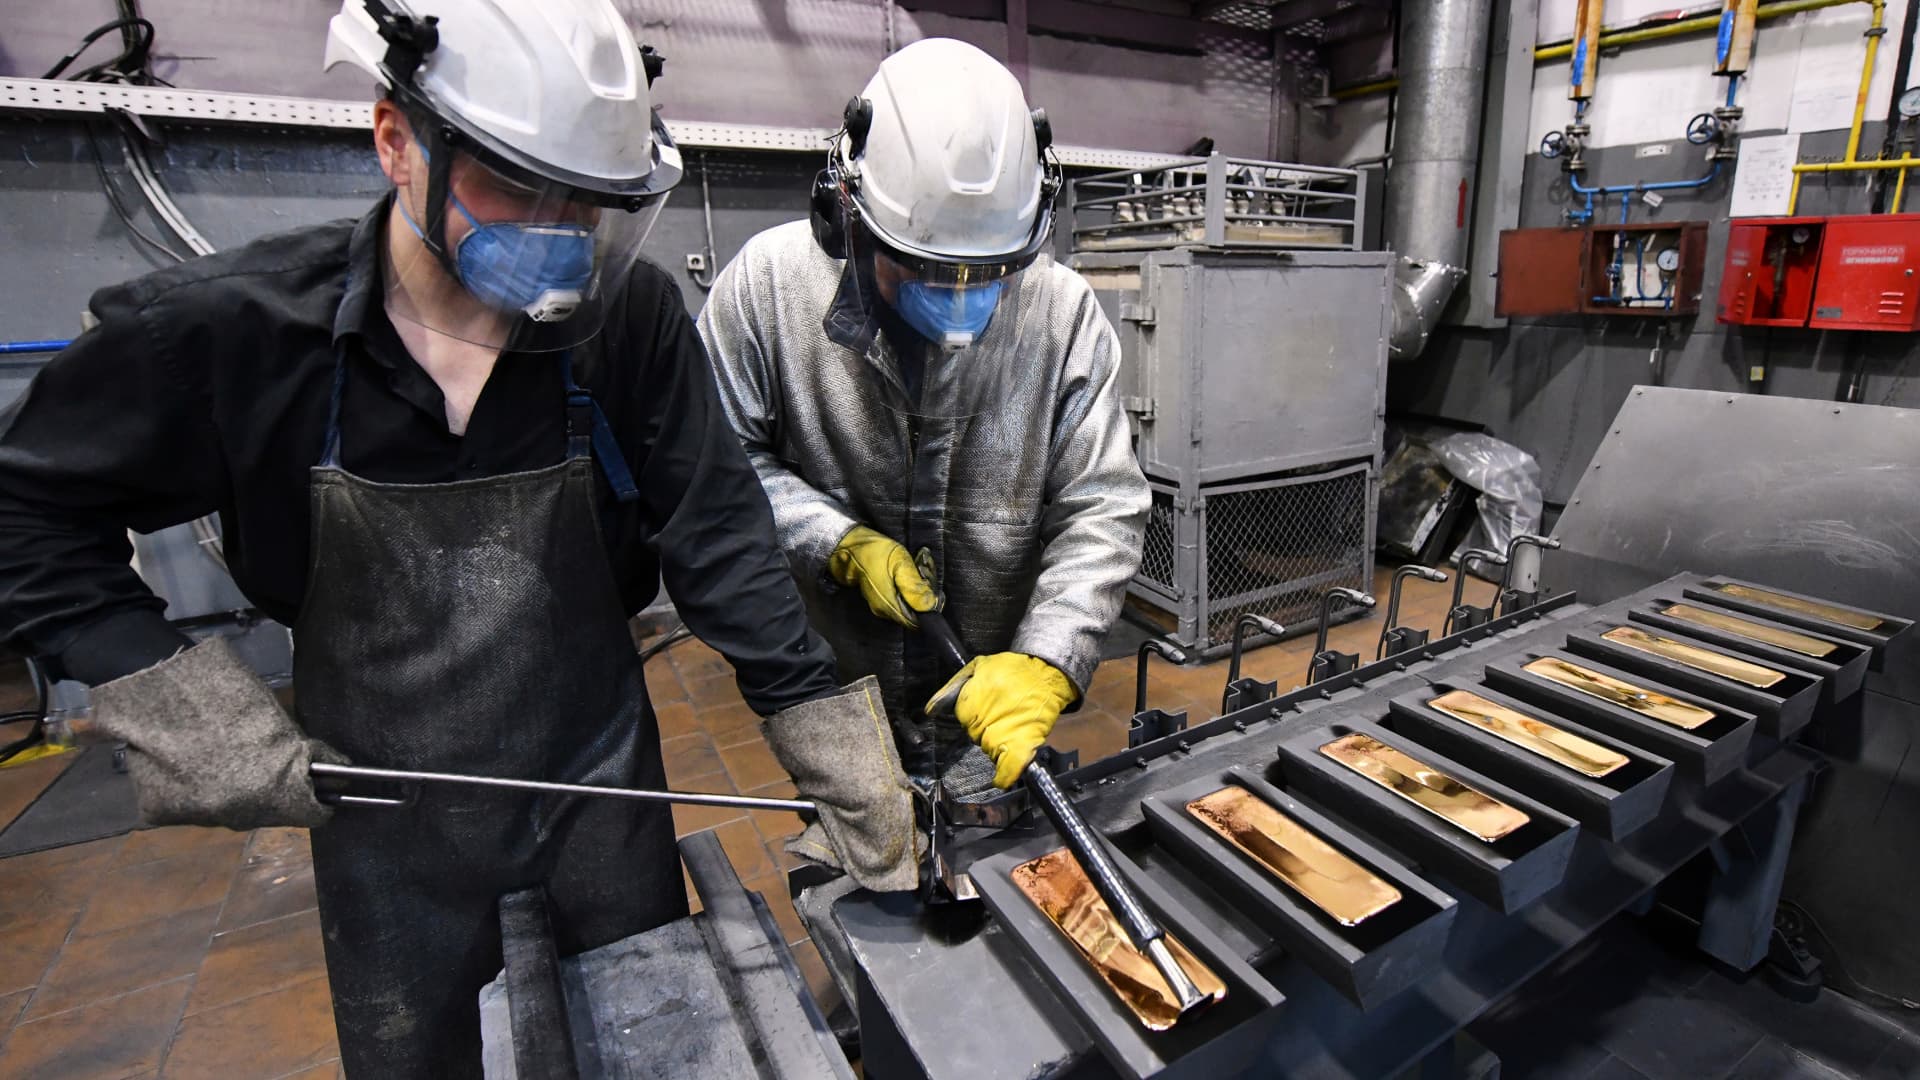 Employees process ingots of 99.99 percent pure gold at the Krastsvetmet non-ferrous metals plant in the Siberian city of Krasnoyarsk, Russia March 10, 2022.